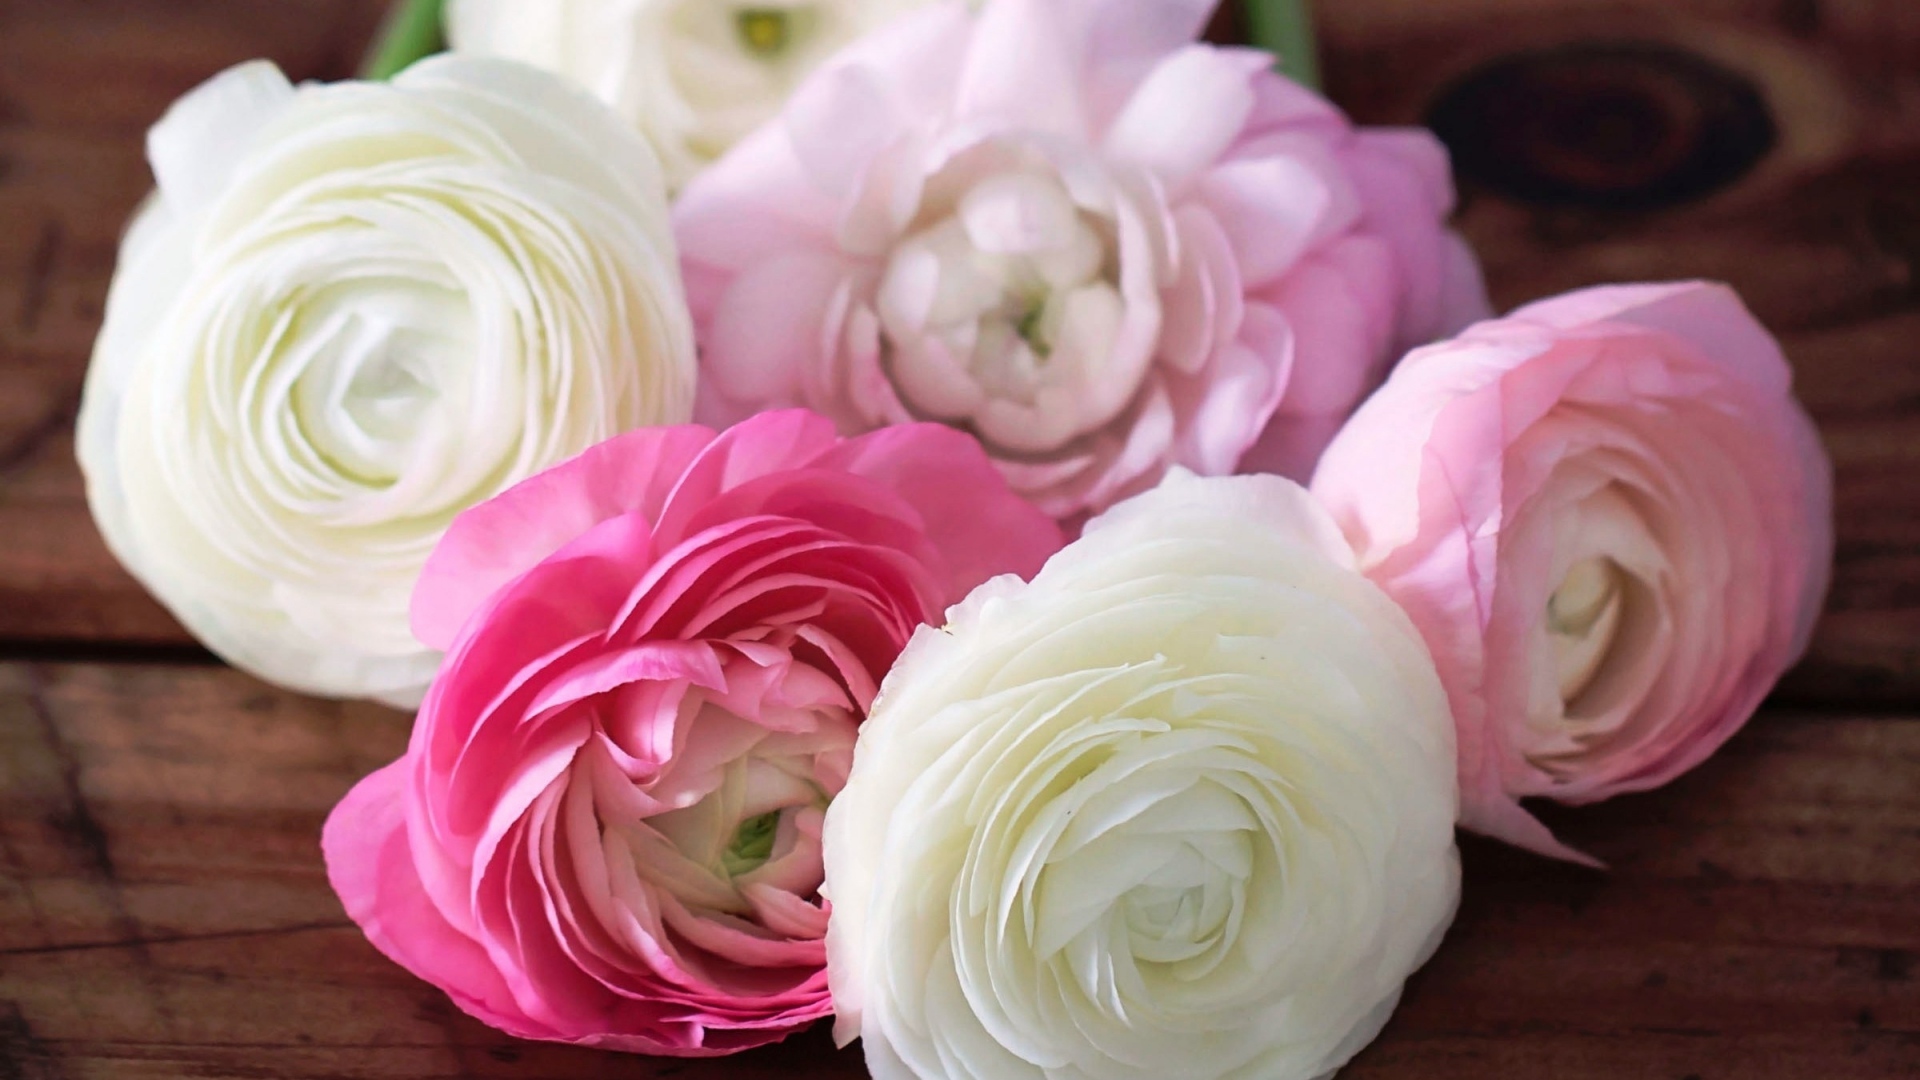 buttercup_ranunculus_flowers_buds_petals_white_pink_80423_1920x1080